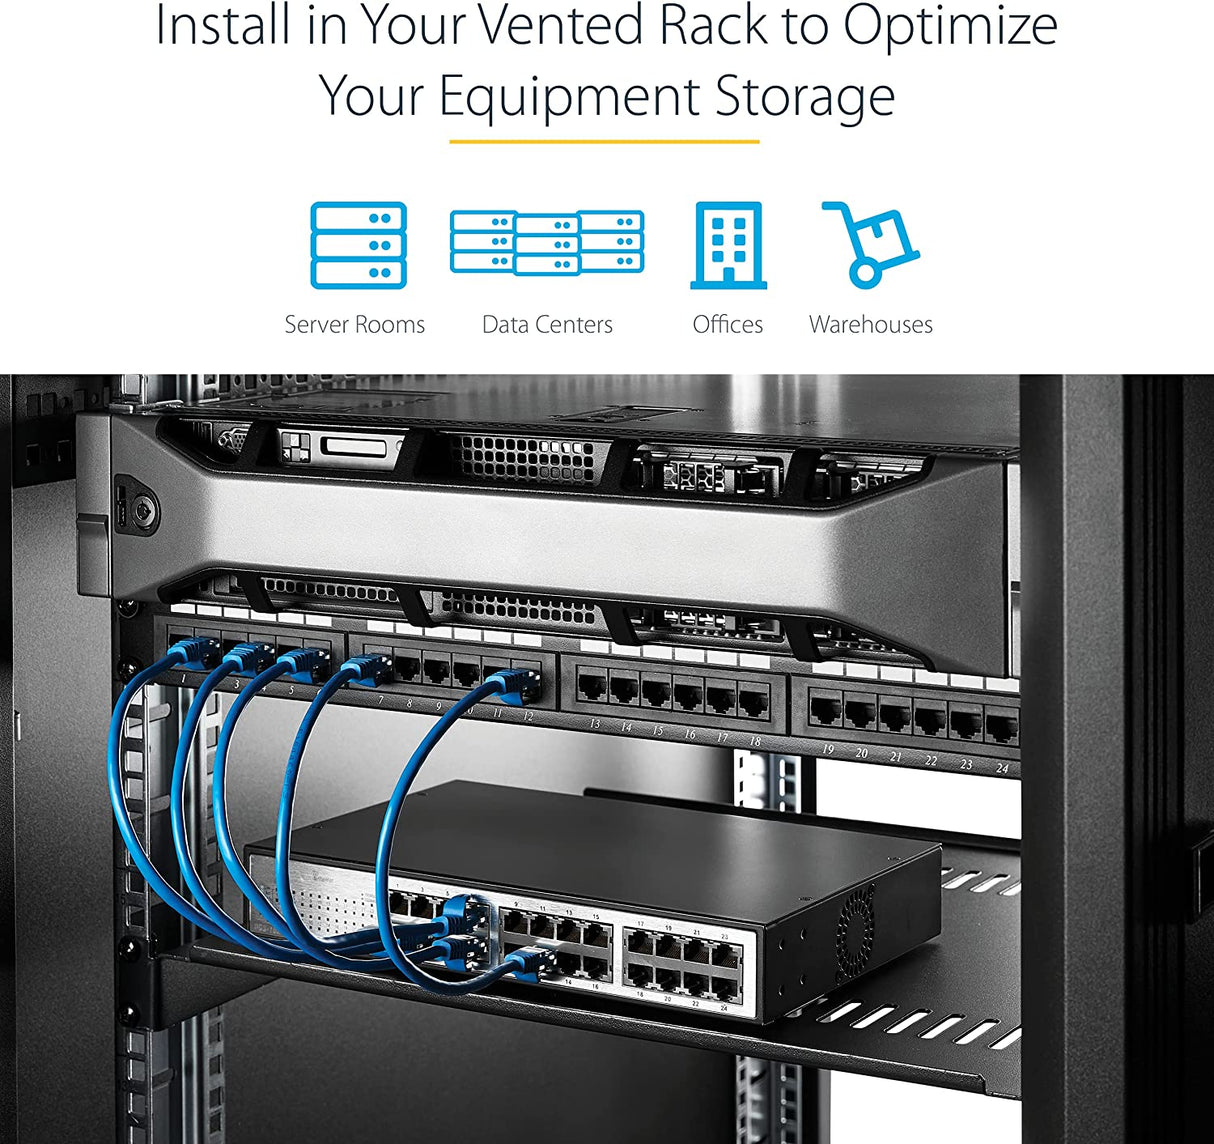 StarTech.com 1U Server Rack Shelf - Universal Vented Rack Mount Cantilever Tray for 19" Network Equipment Rack &amp; Cabinet - Heavy Duty Steel - Weight Capacity 50lb/23kg - 10" Deep, Black (CABSHELFV1U) 1U 10" Depth